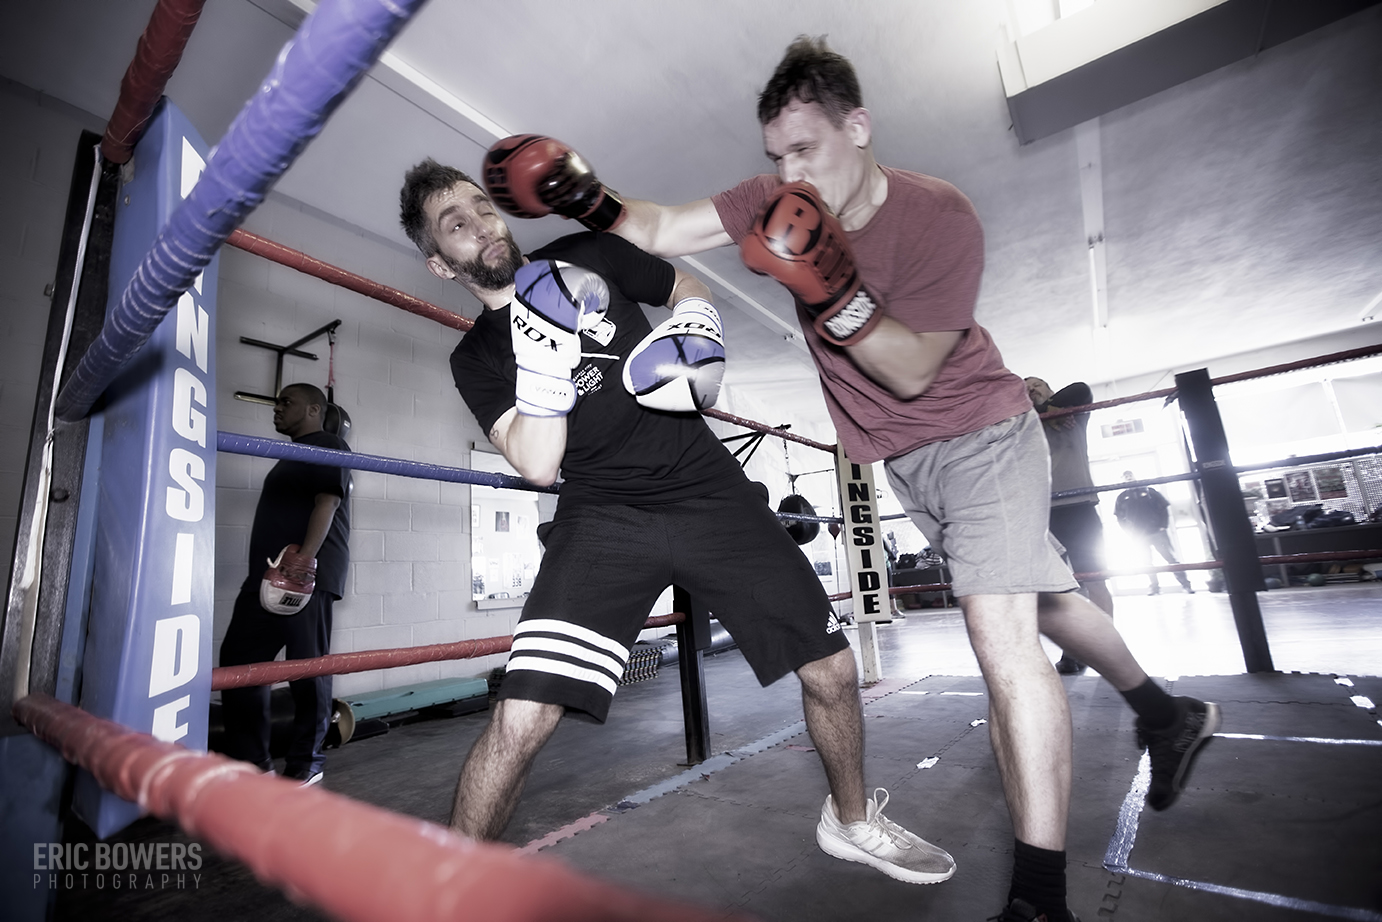 Boxing Gym Scenes (59)